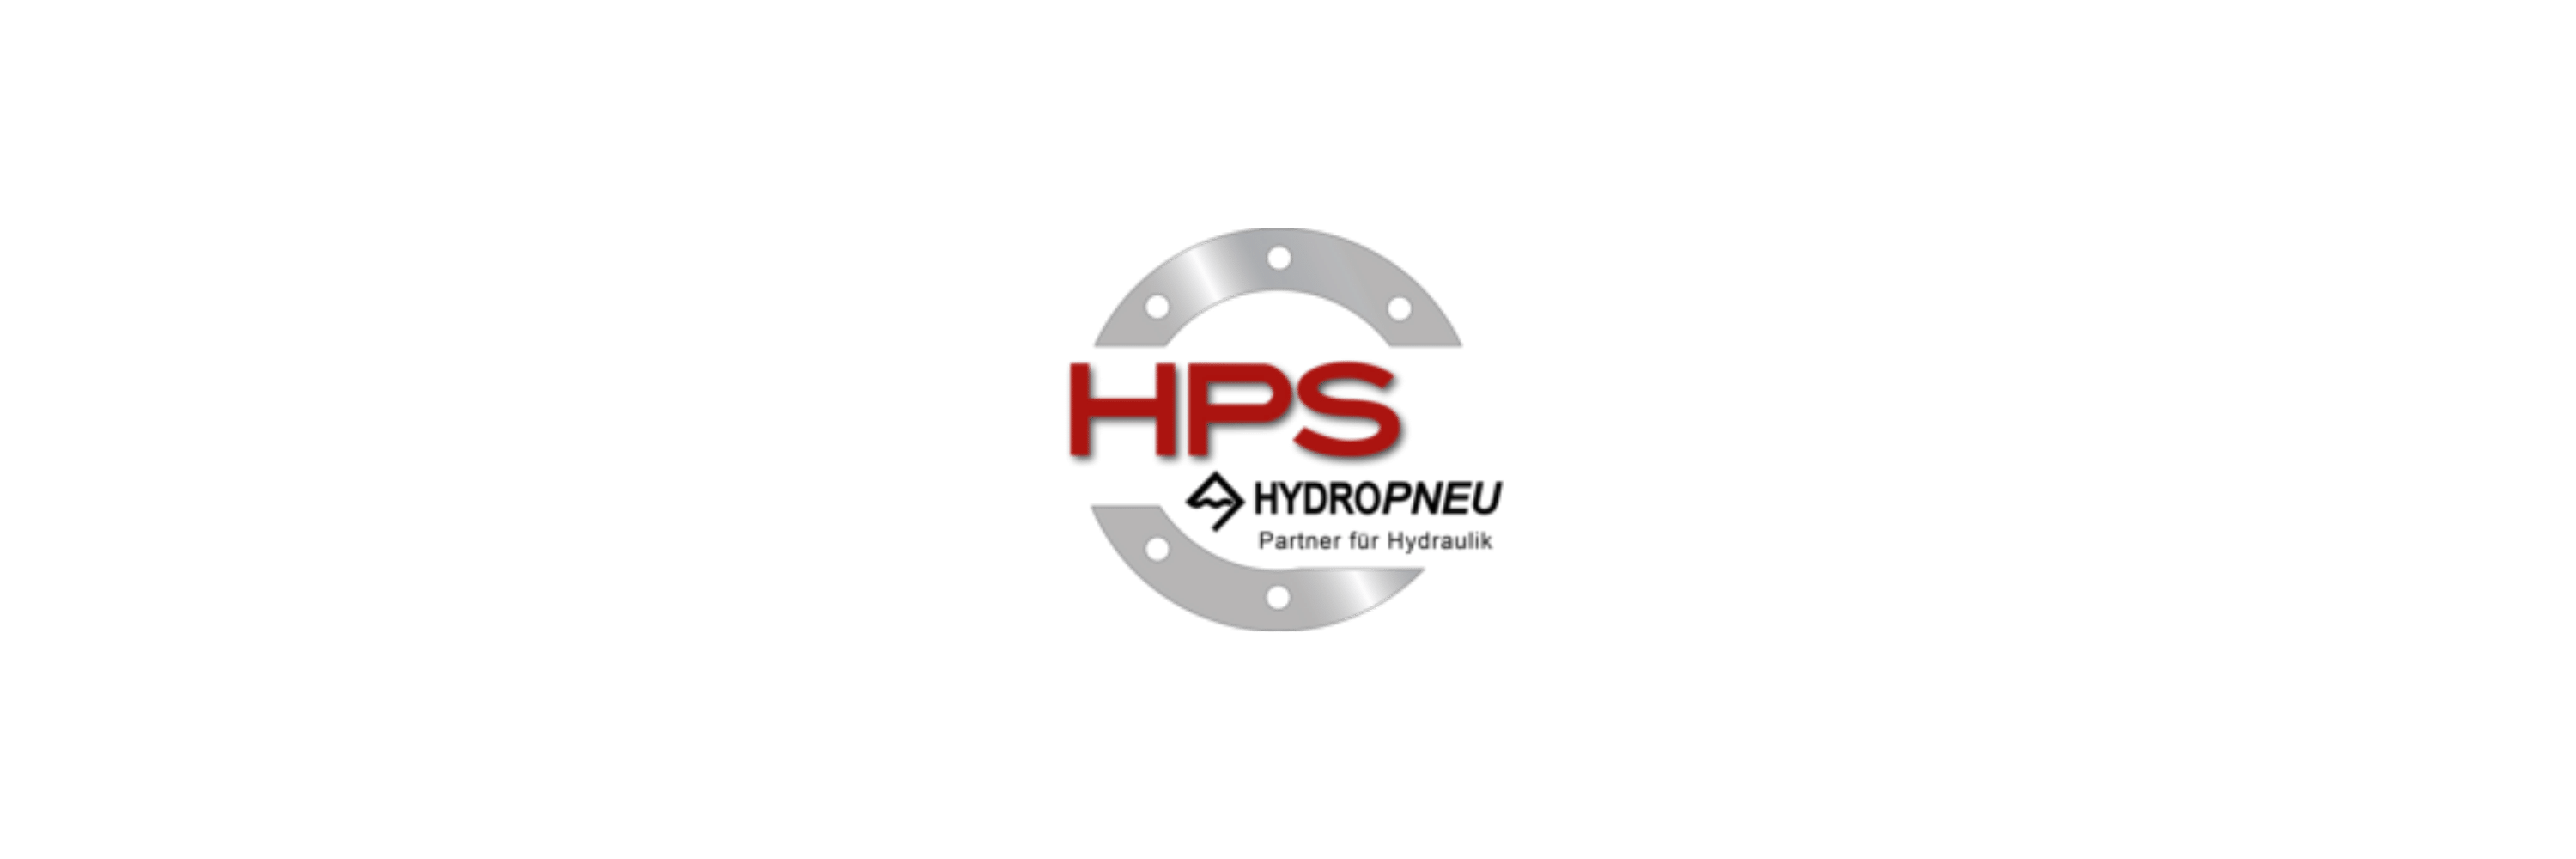 HPS / Hydropneu - Klenk Maschinenhandel